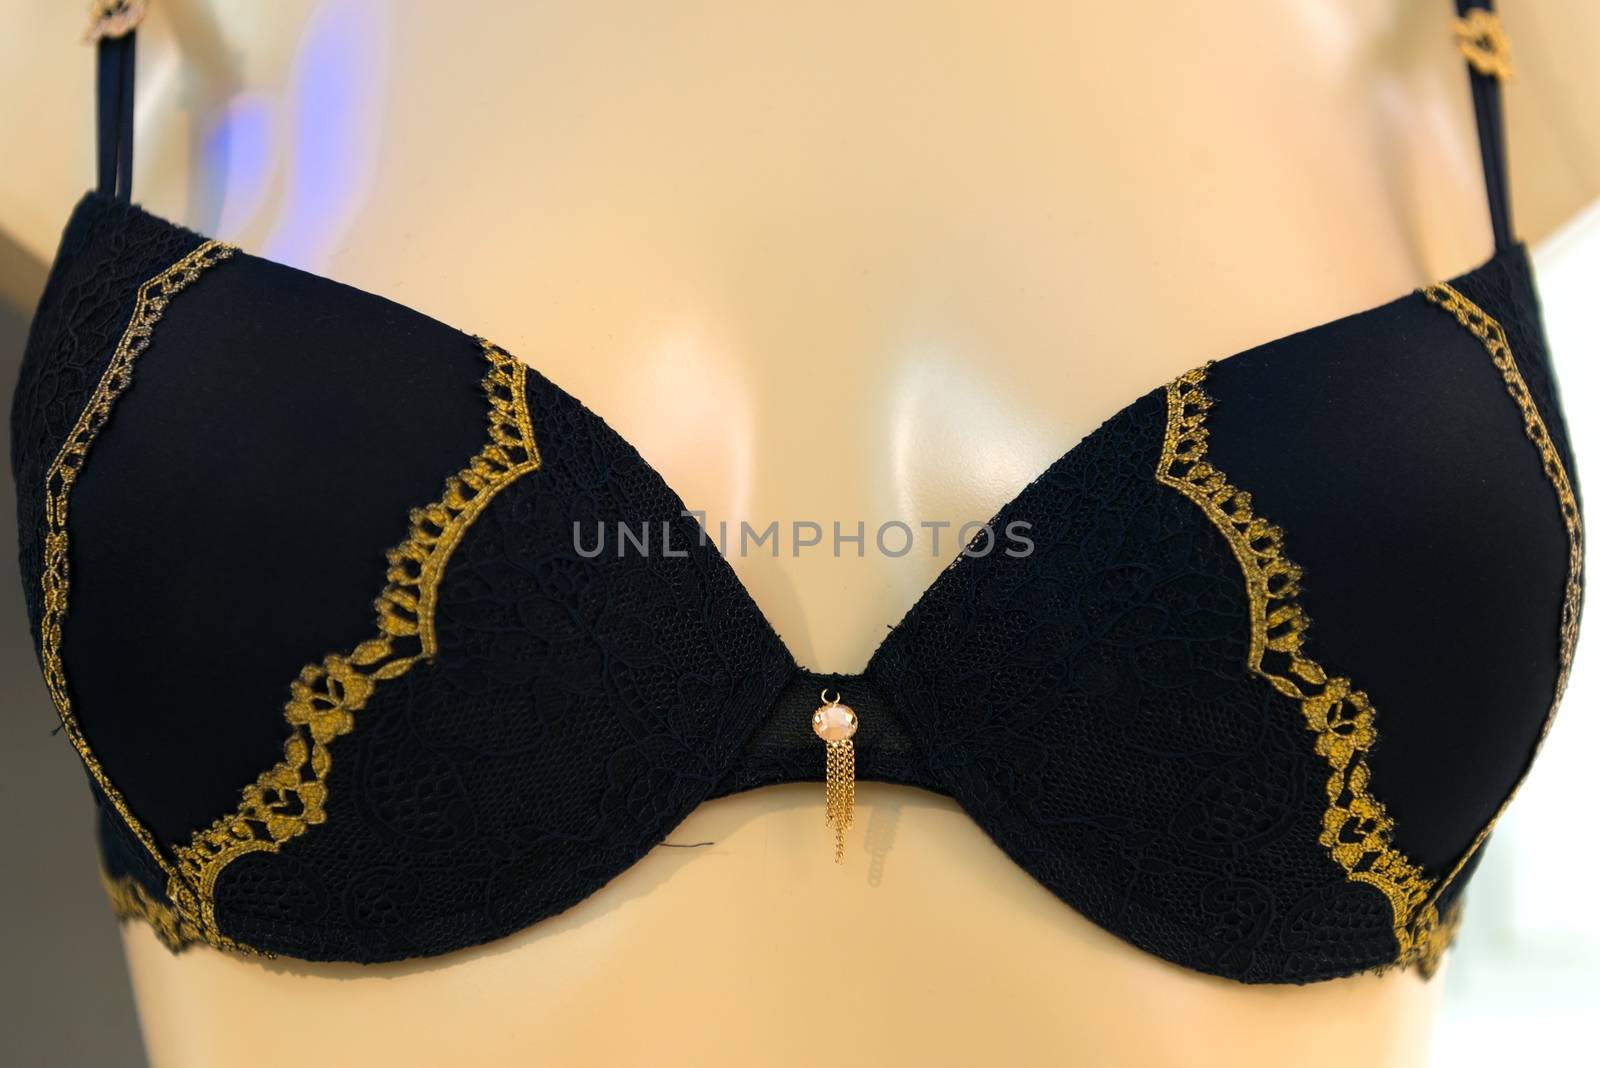 Black bra with decoration close up photo